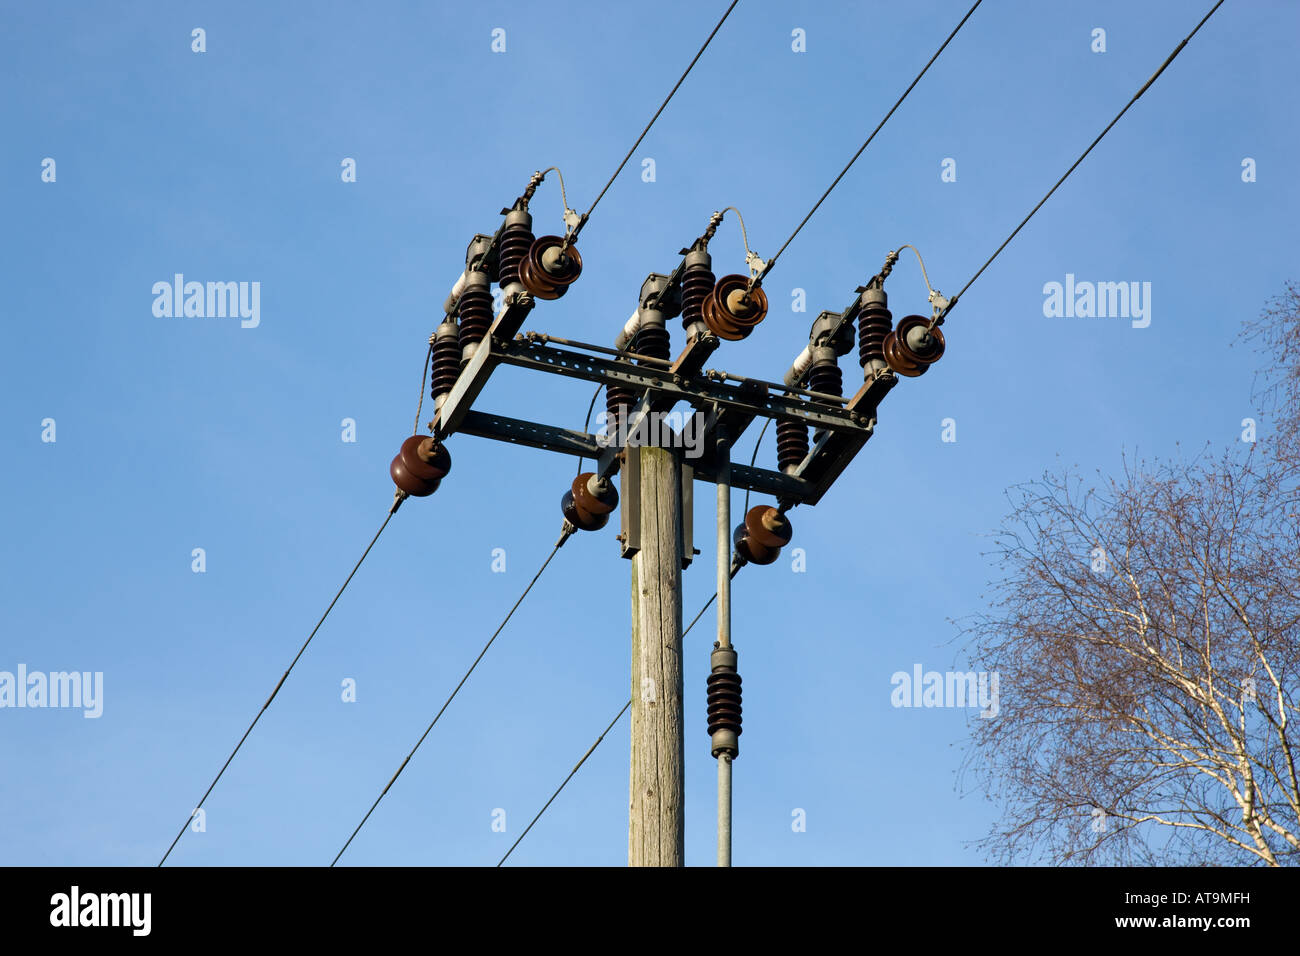 Medium voltage Power line / Electricity pylon Stock Photo